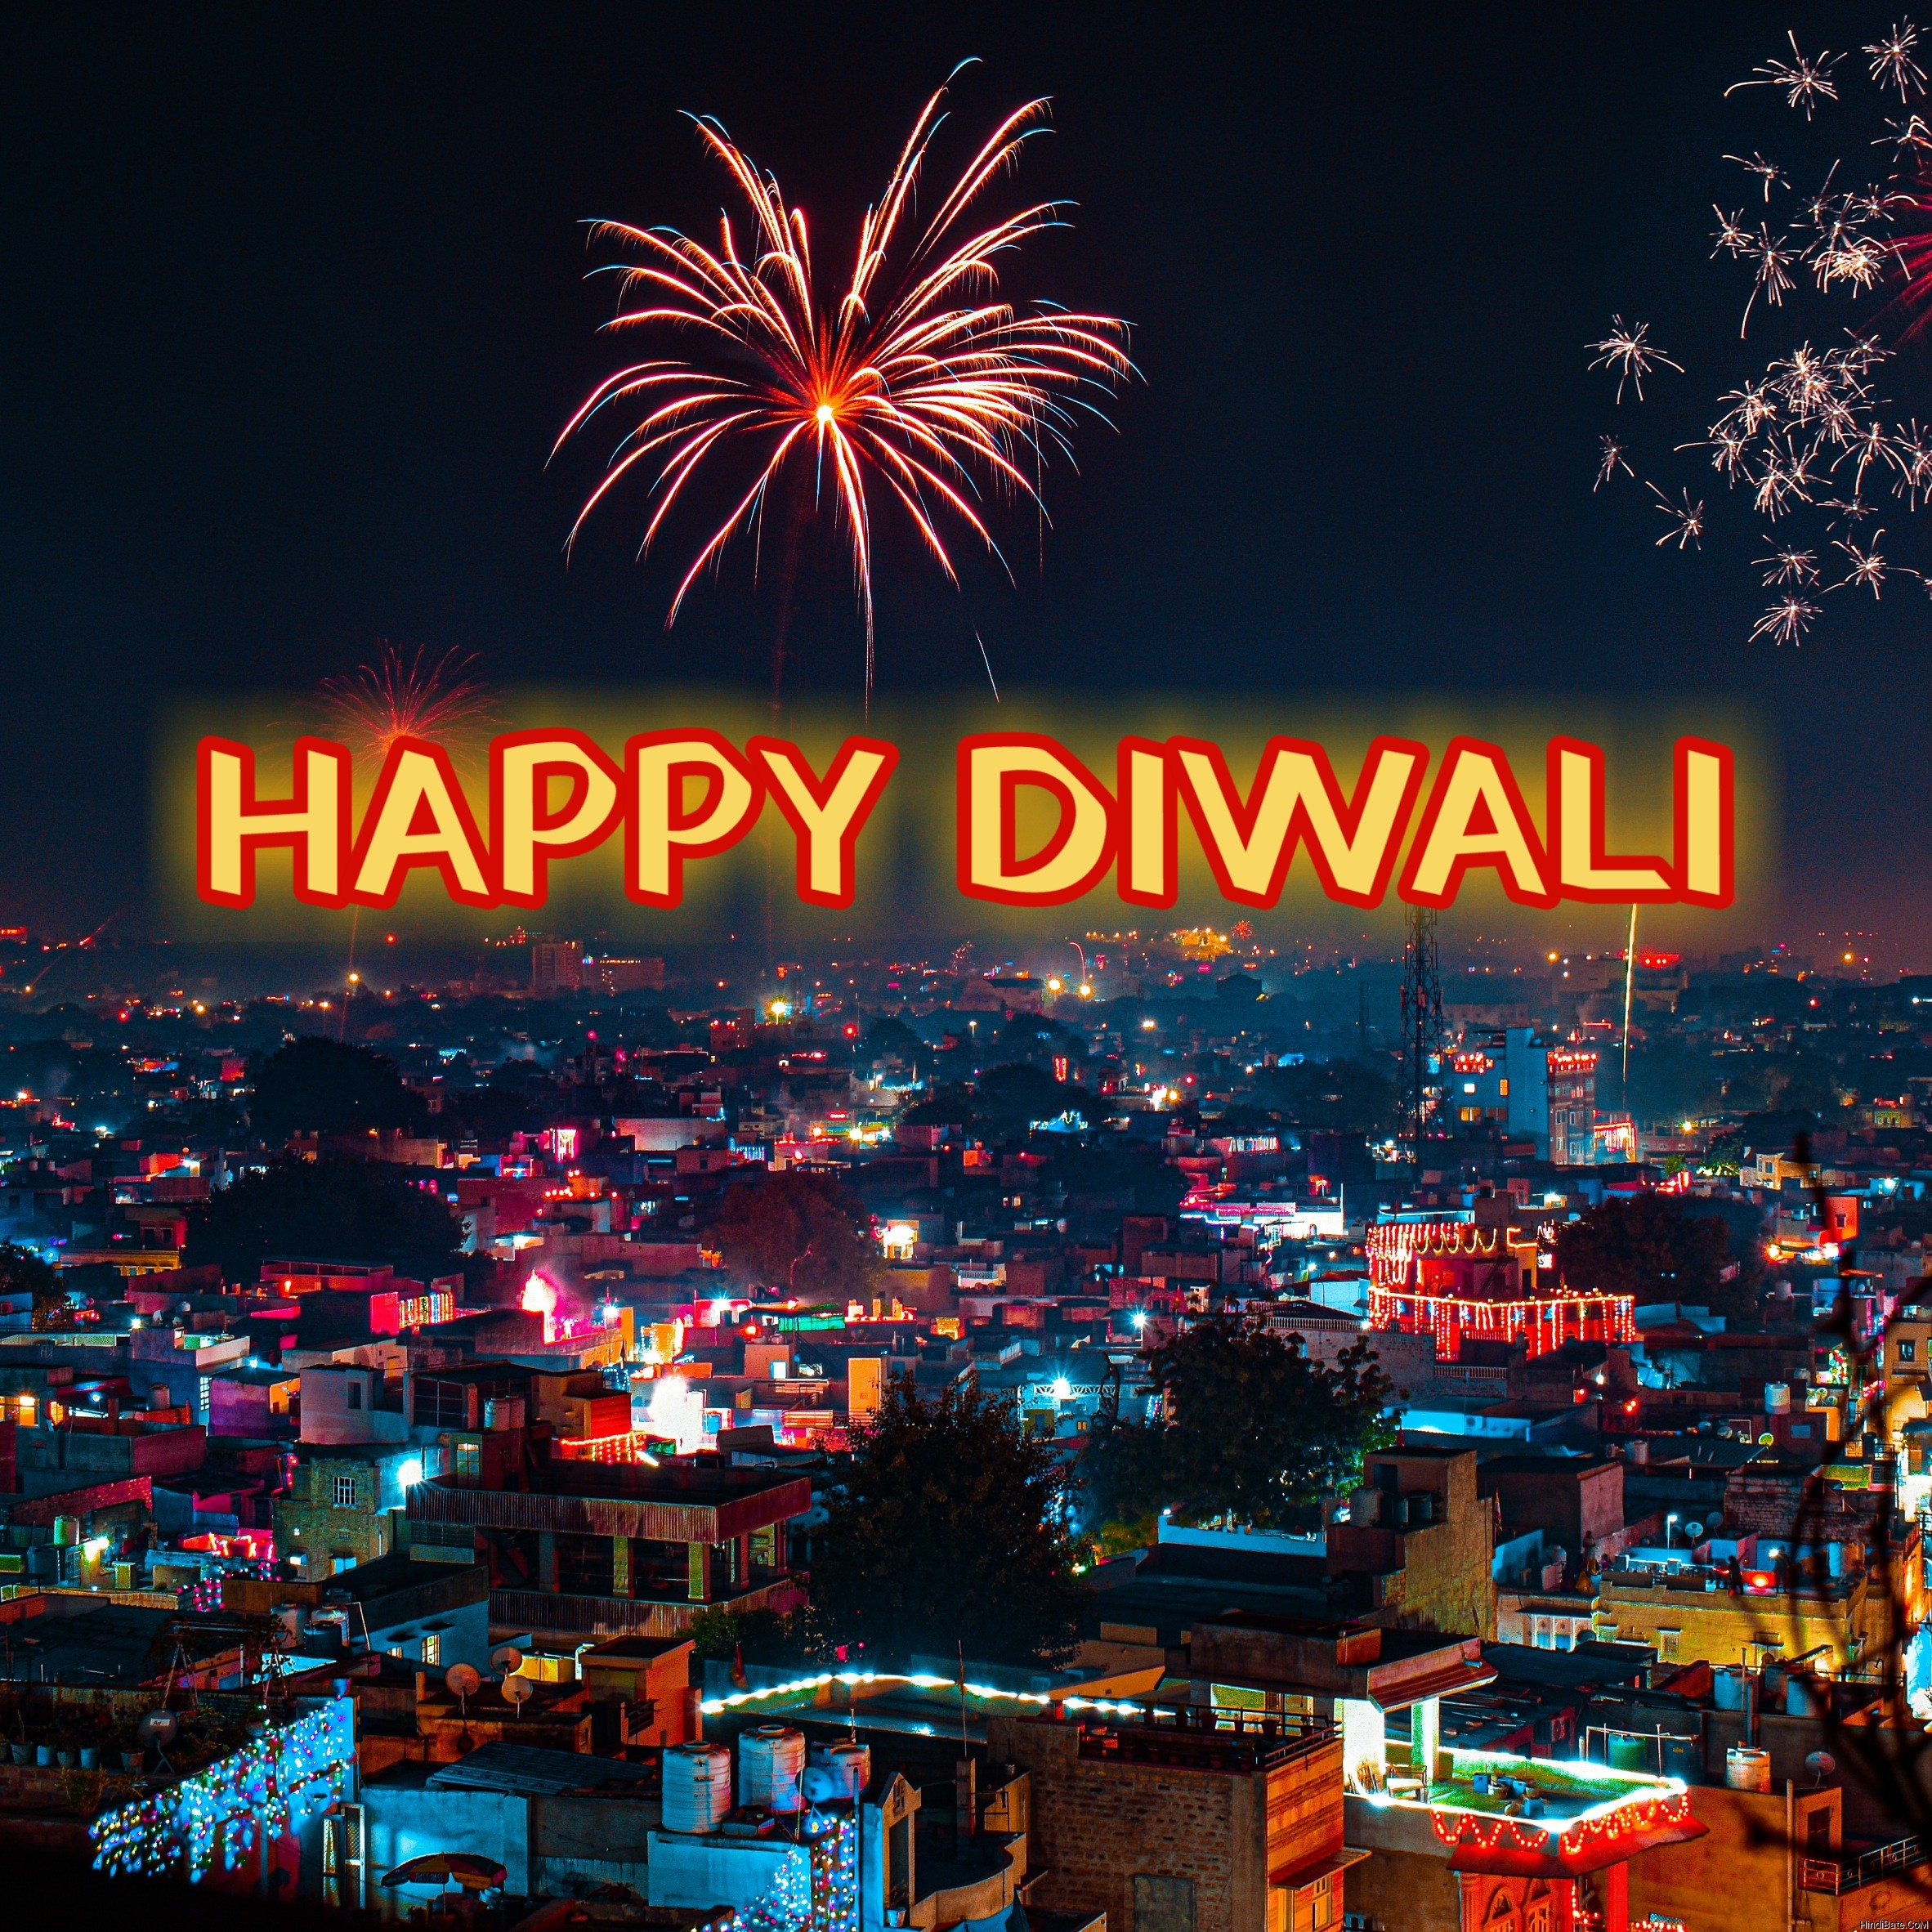 Advance happy Diwali images